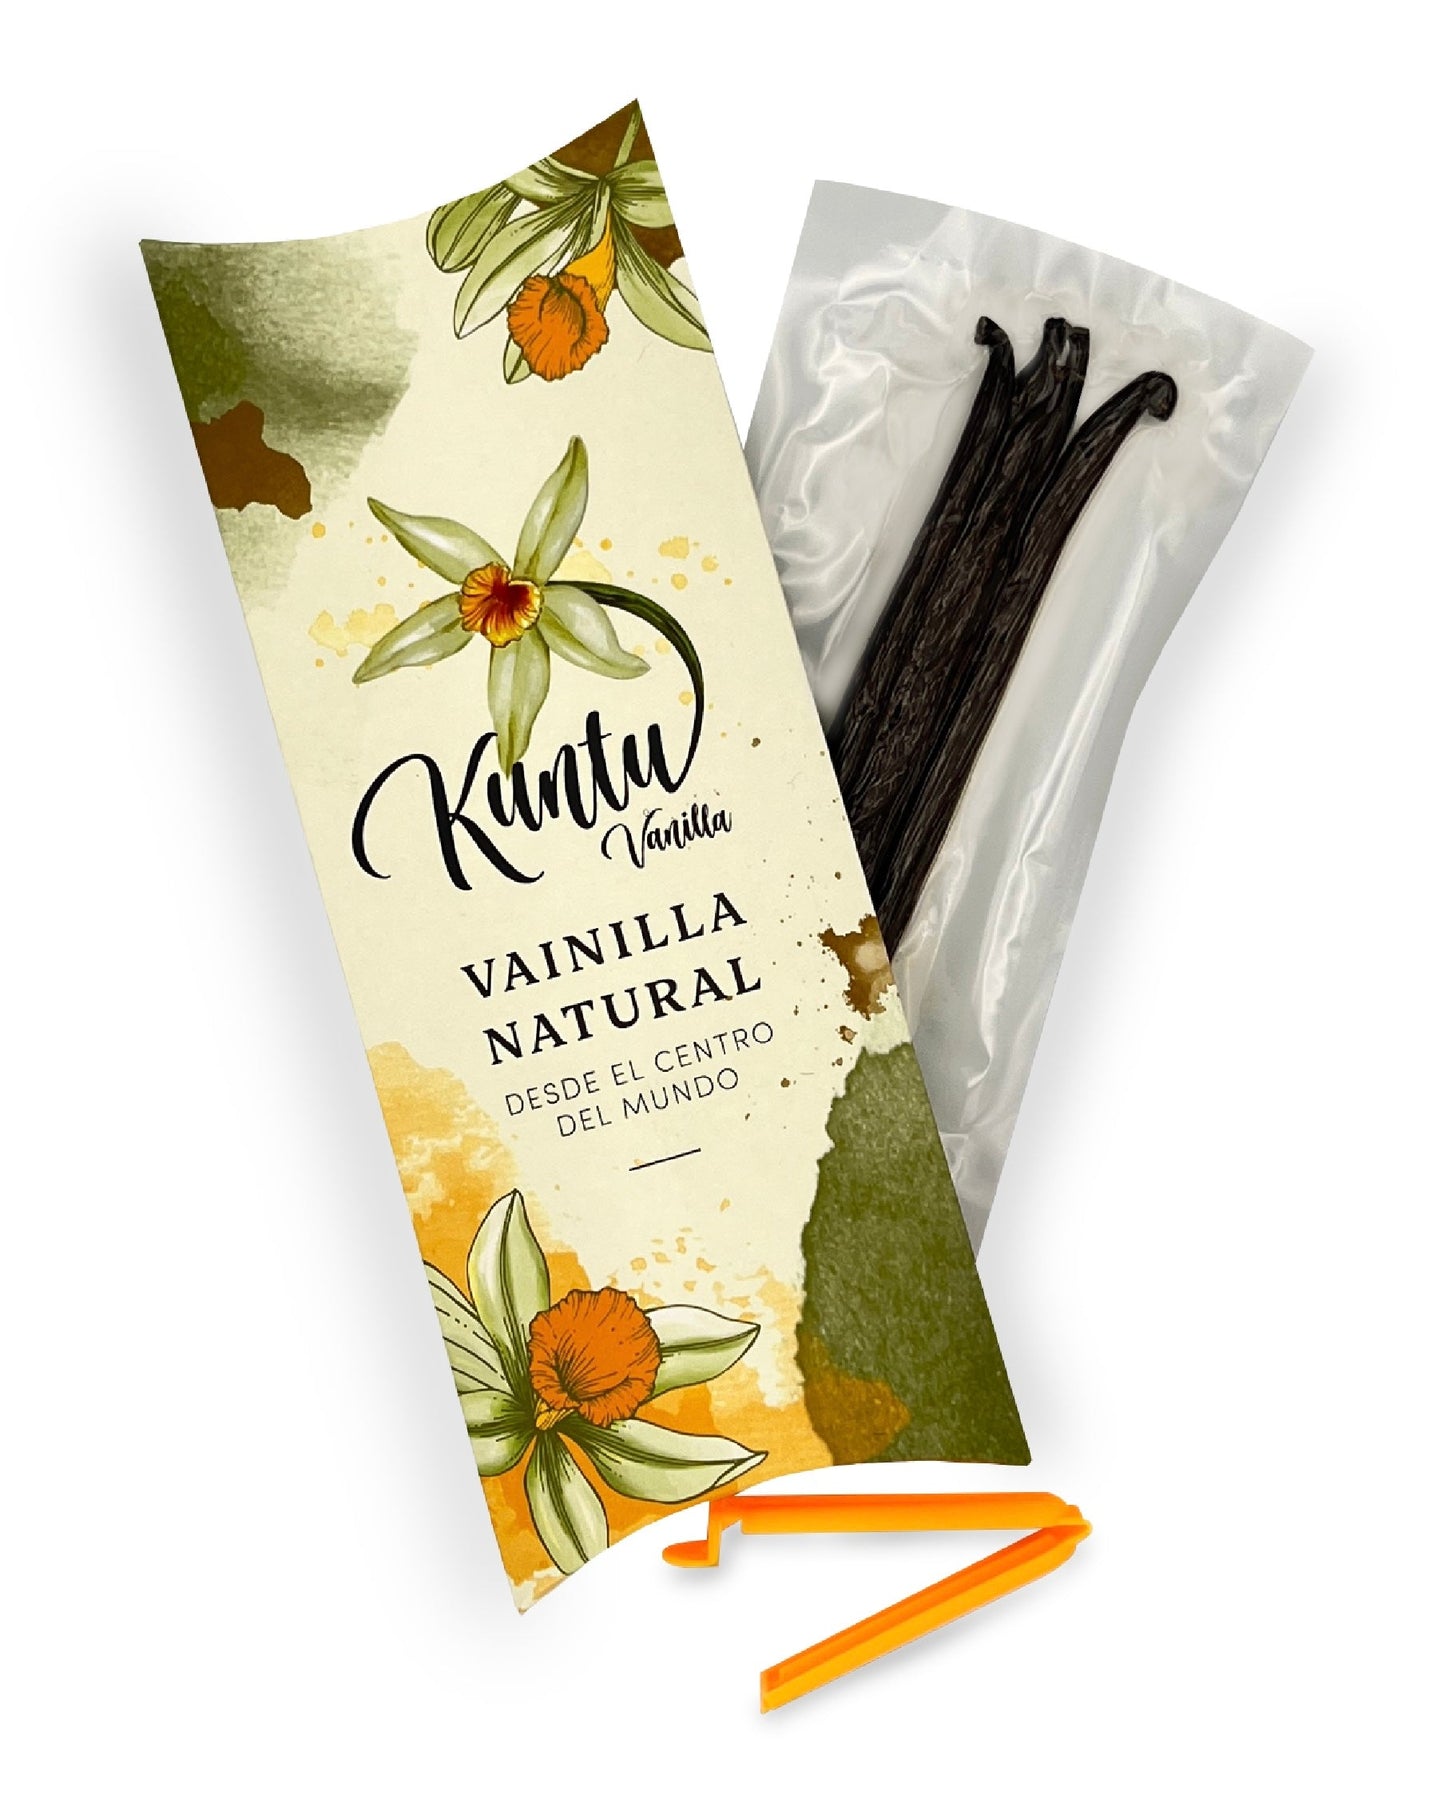 50g (10-12 pieces) gourmet vanilla beans grade A (15-18cm) vacuum packed